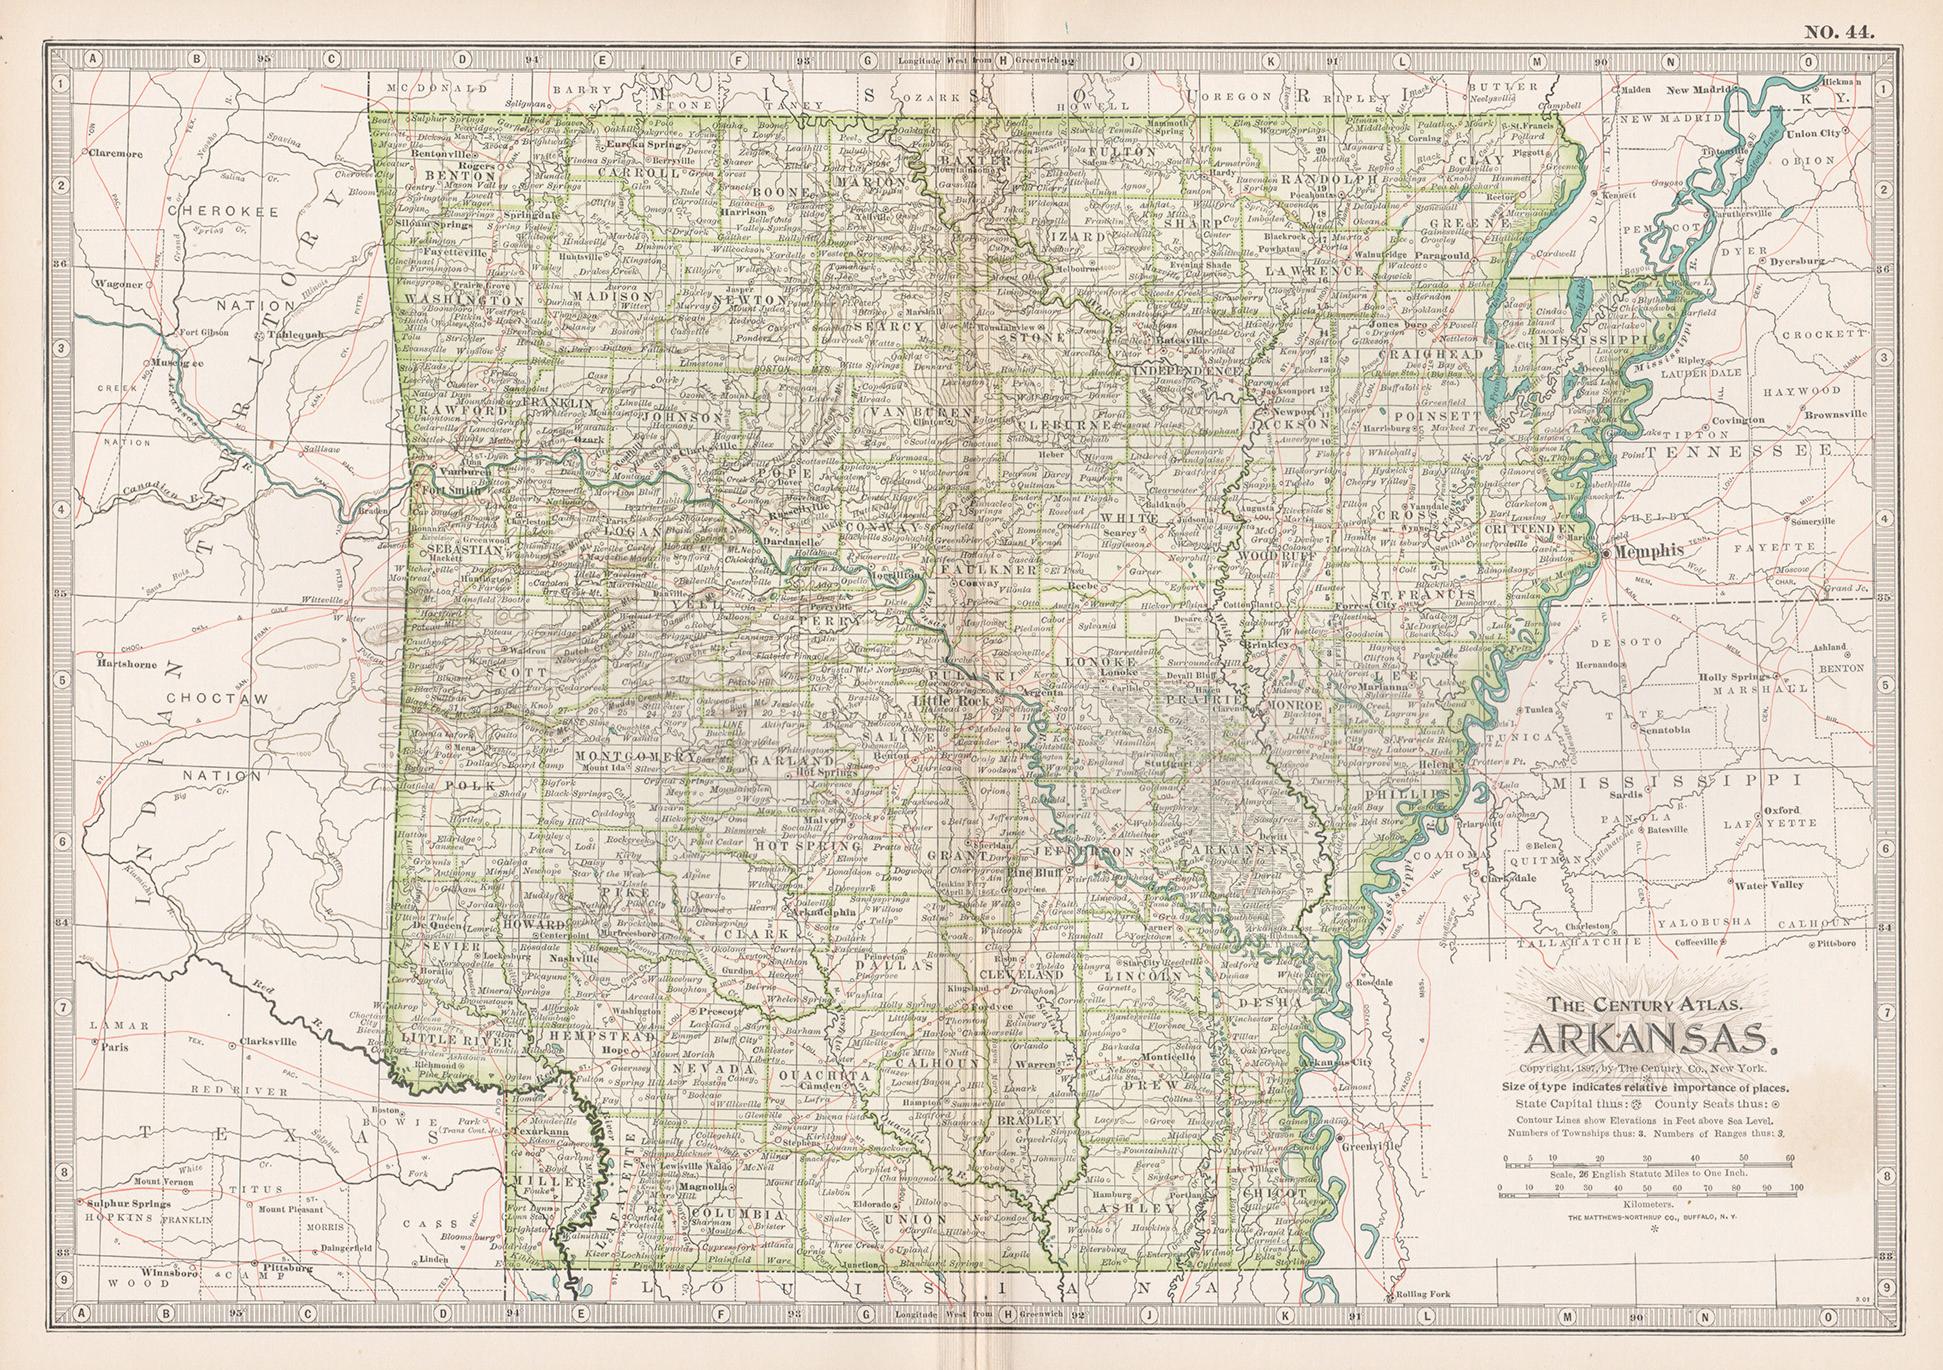 Unknown Print - Arkansas. USA. Century Atlas state antique vintage map